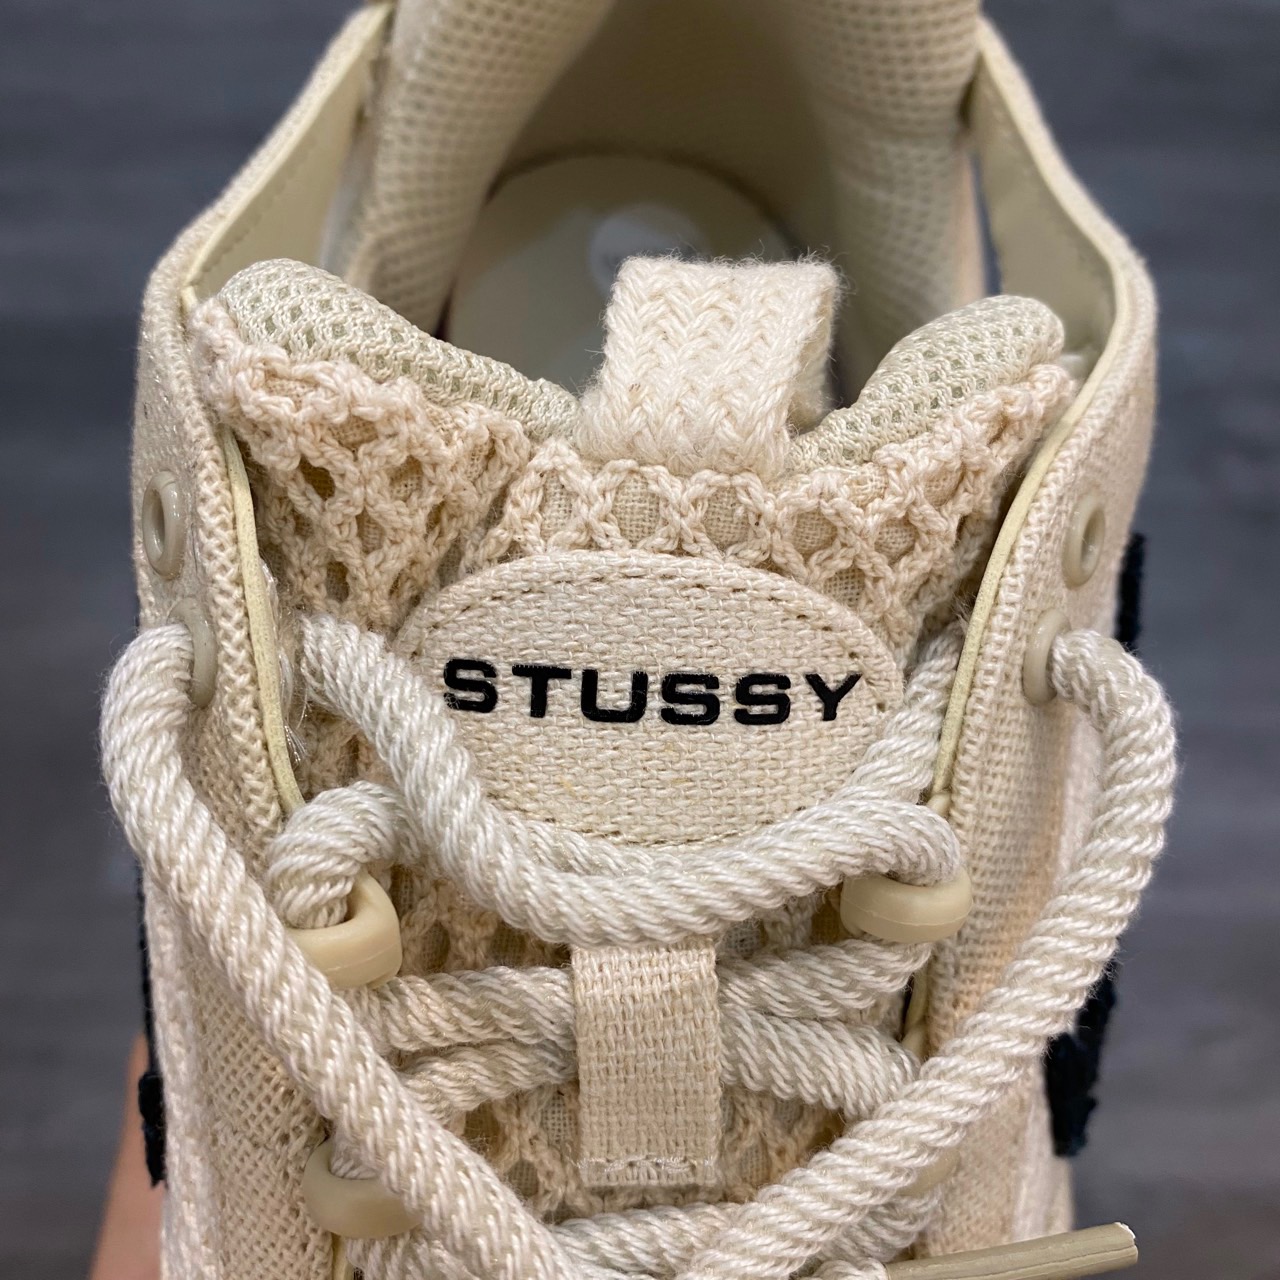 Nike Stussy Fossil